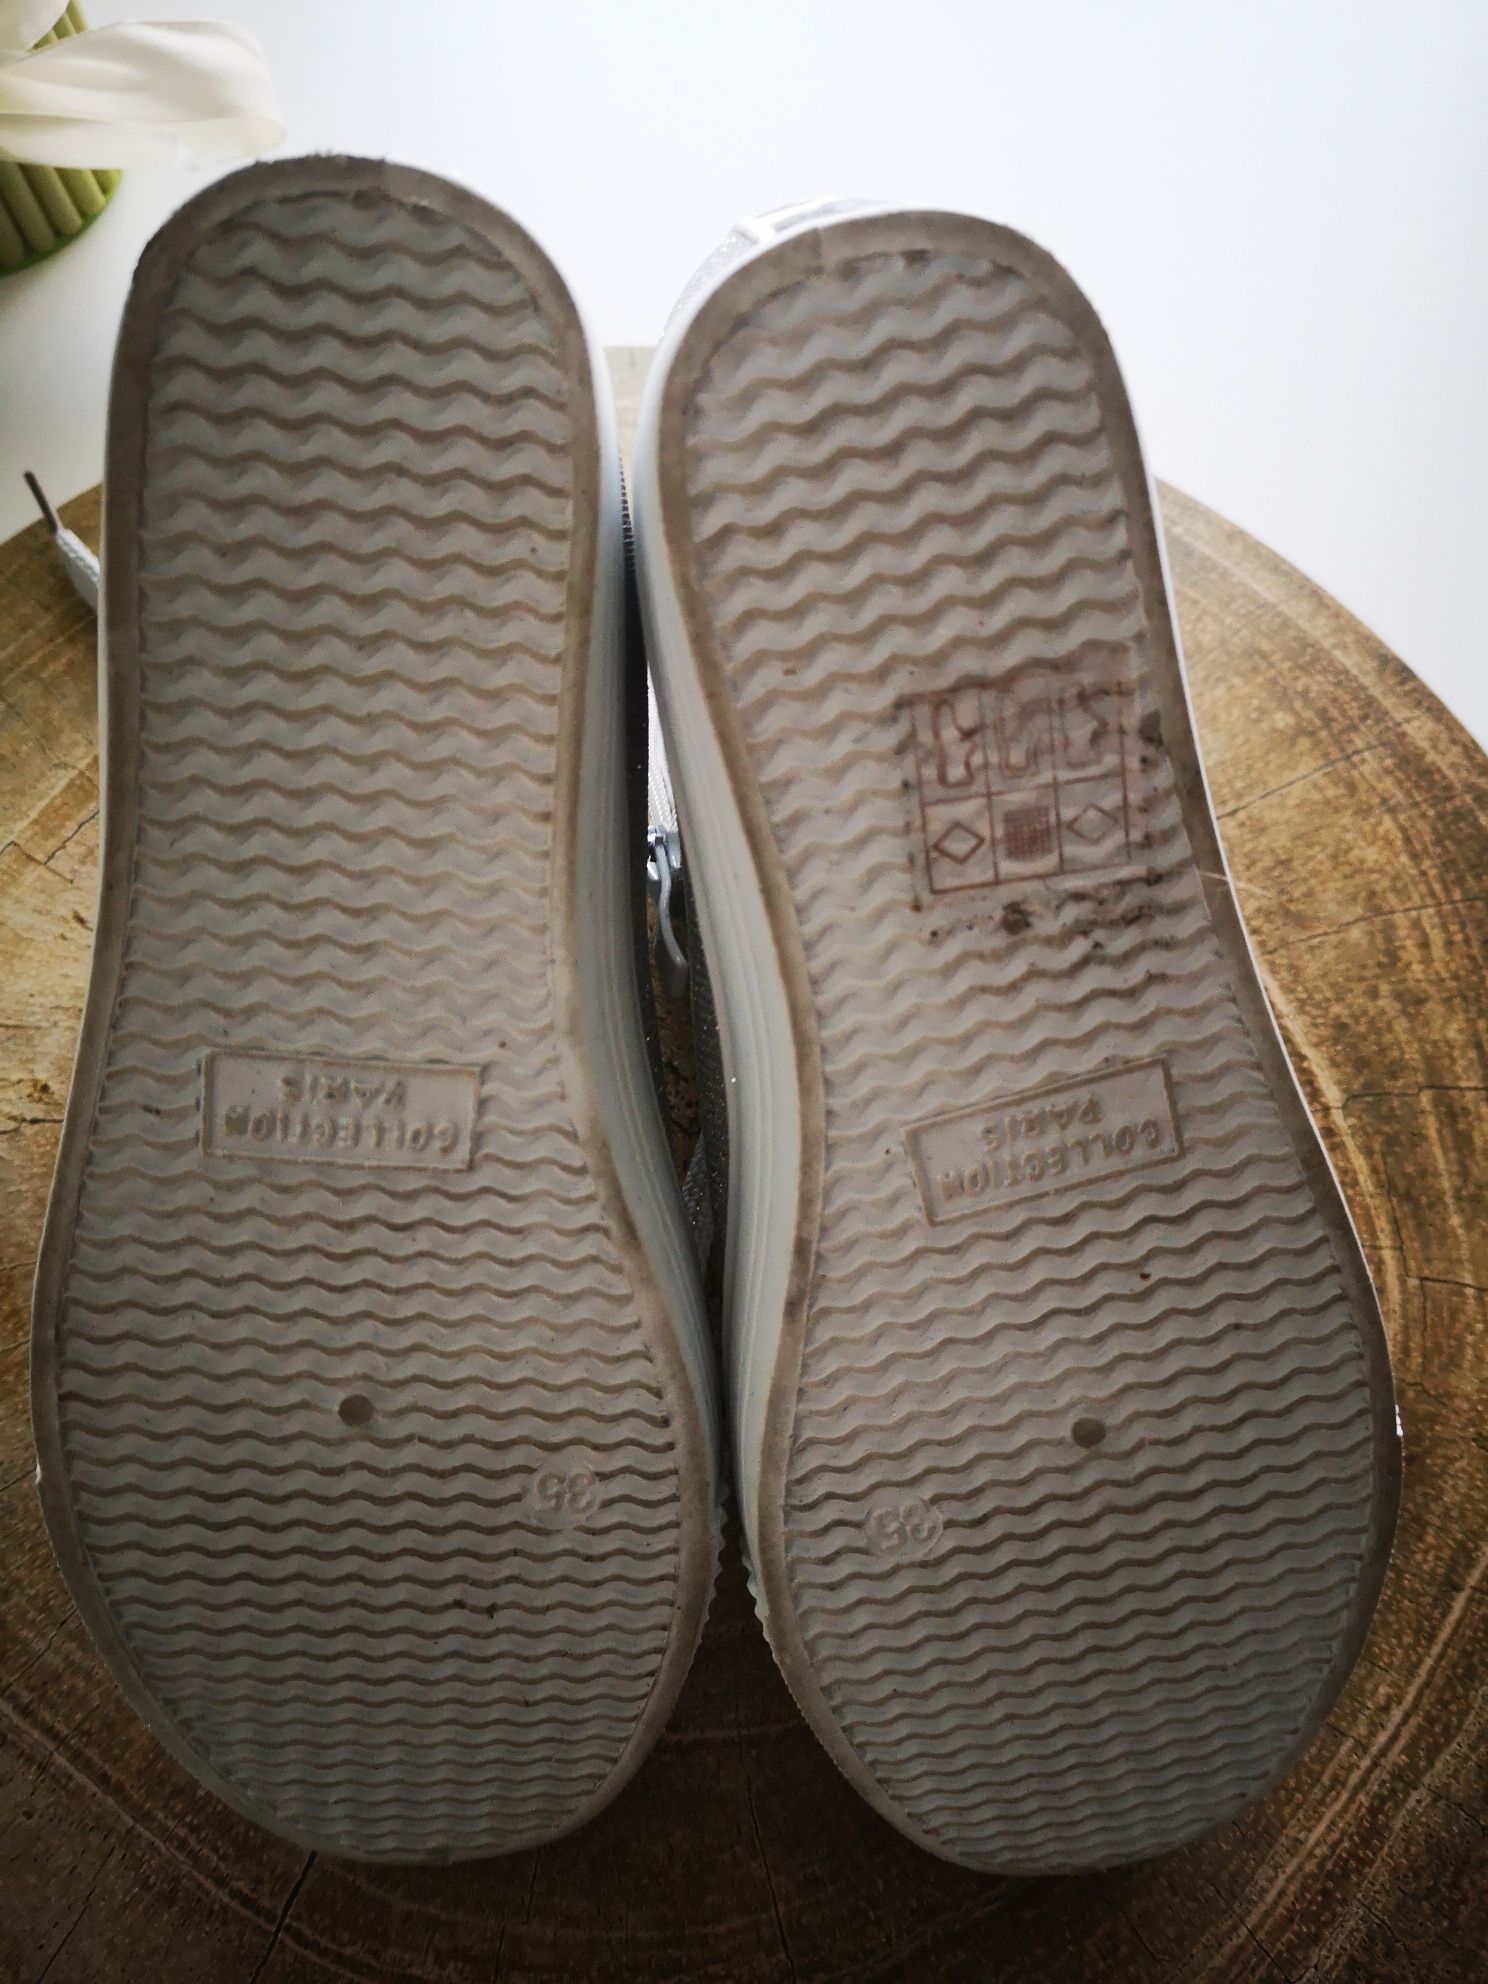 Nowe buty damskie, Collection Paris, Silver DD387-2 rozmiar 35